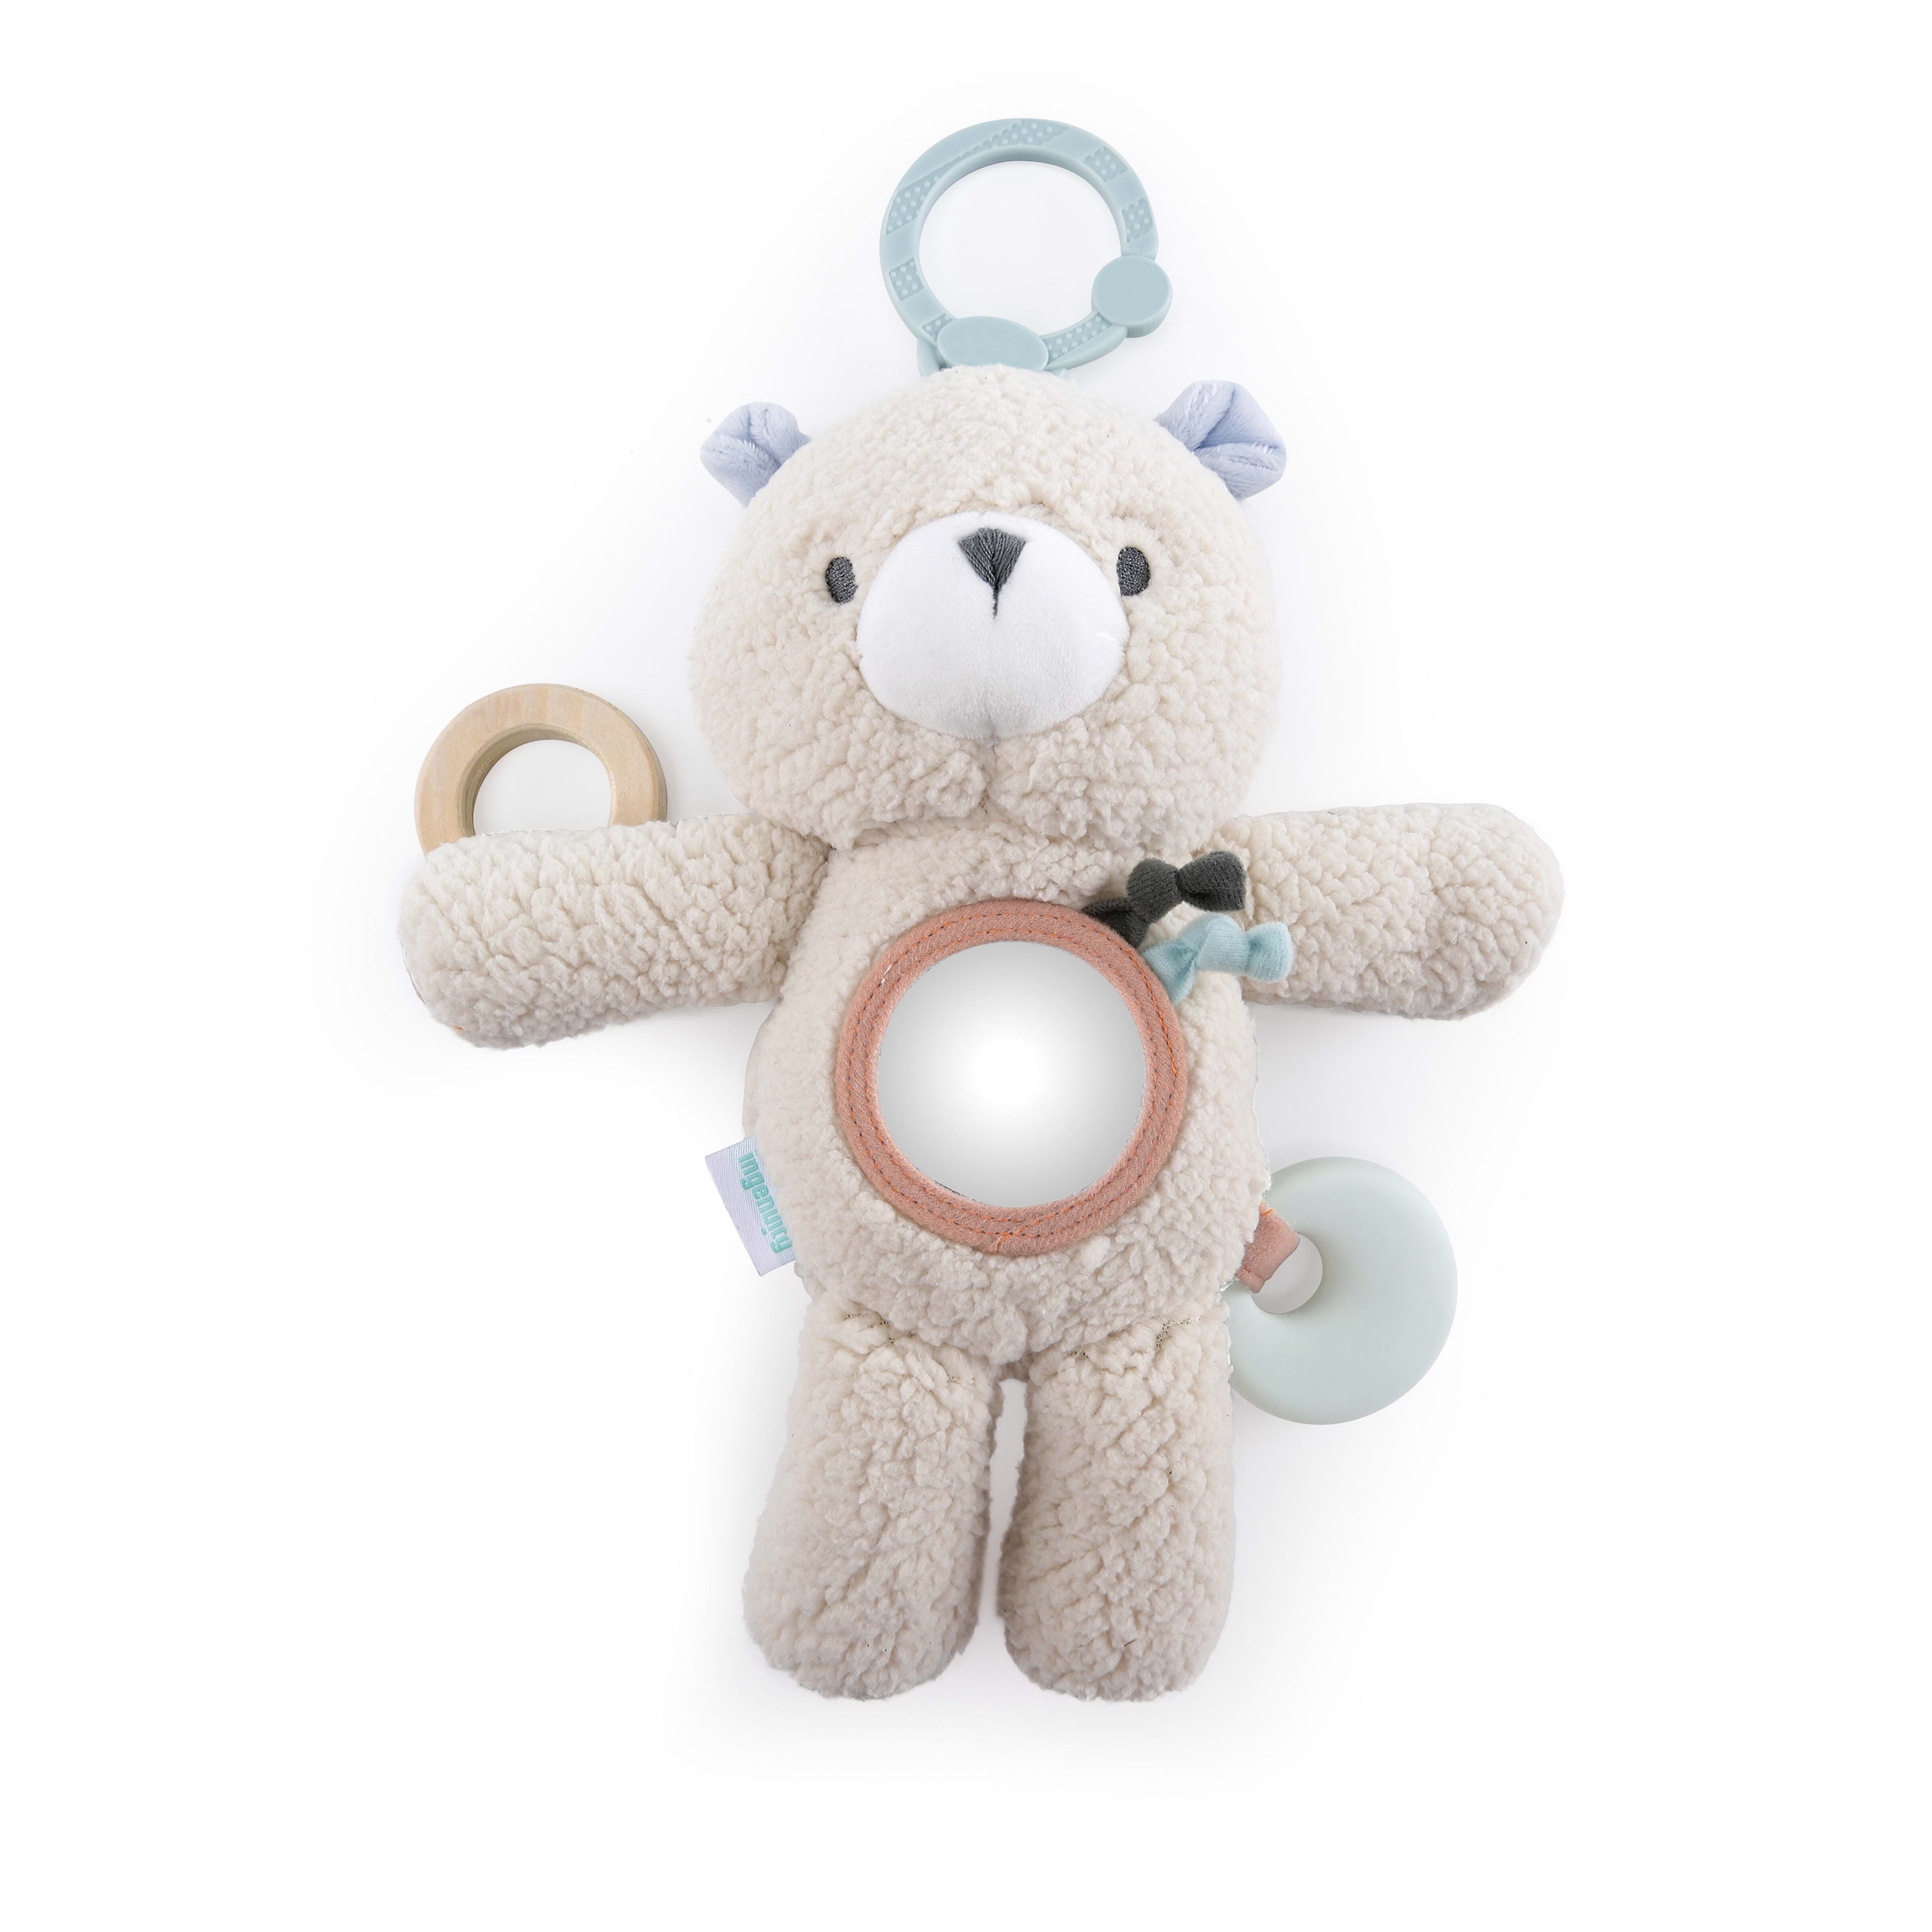 Lamaze My Friend Emily Soft Doll Play & Go Pram Toy Baby Infant Girls 0 Lc27026 for sale online 